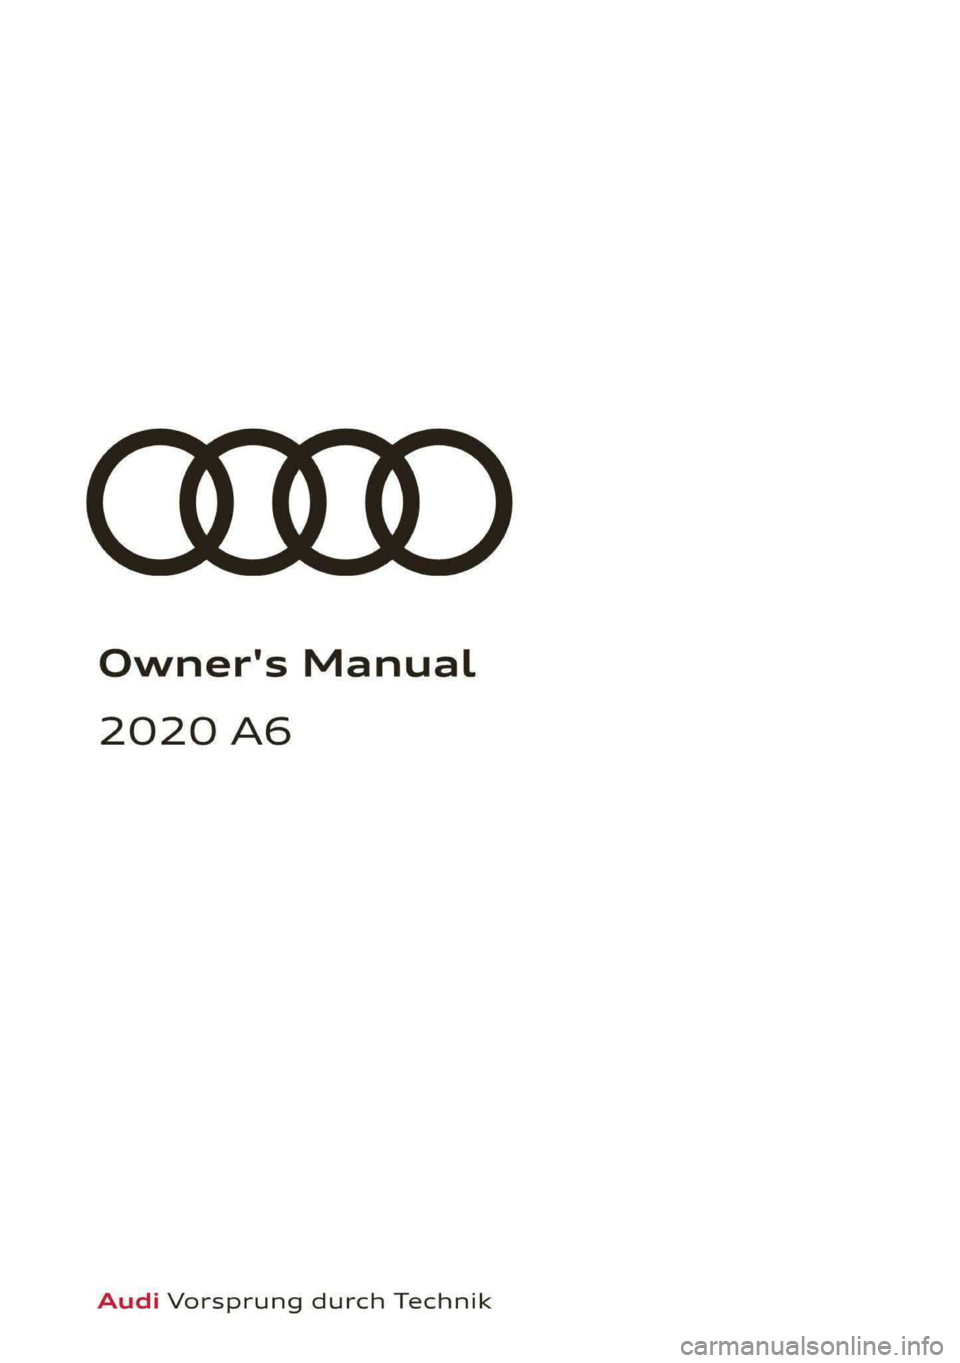 AUDI A6 2020  Owners Manual Owner's Manual 
2020 A6 
Audi Vorsprung durch Technik  